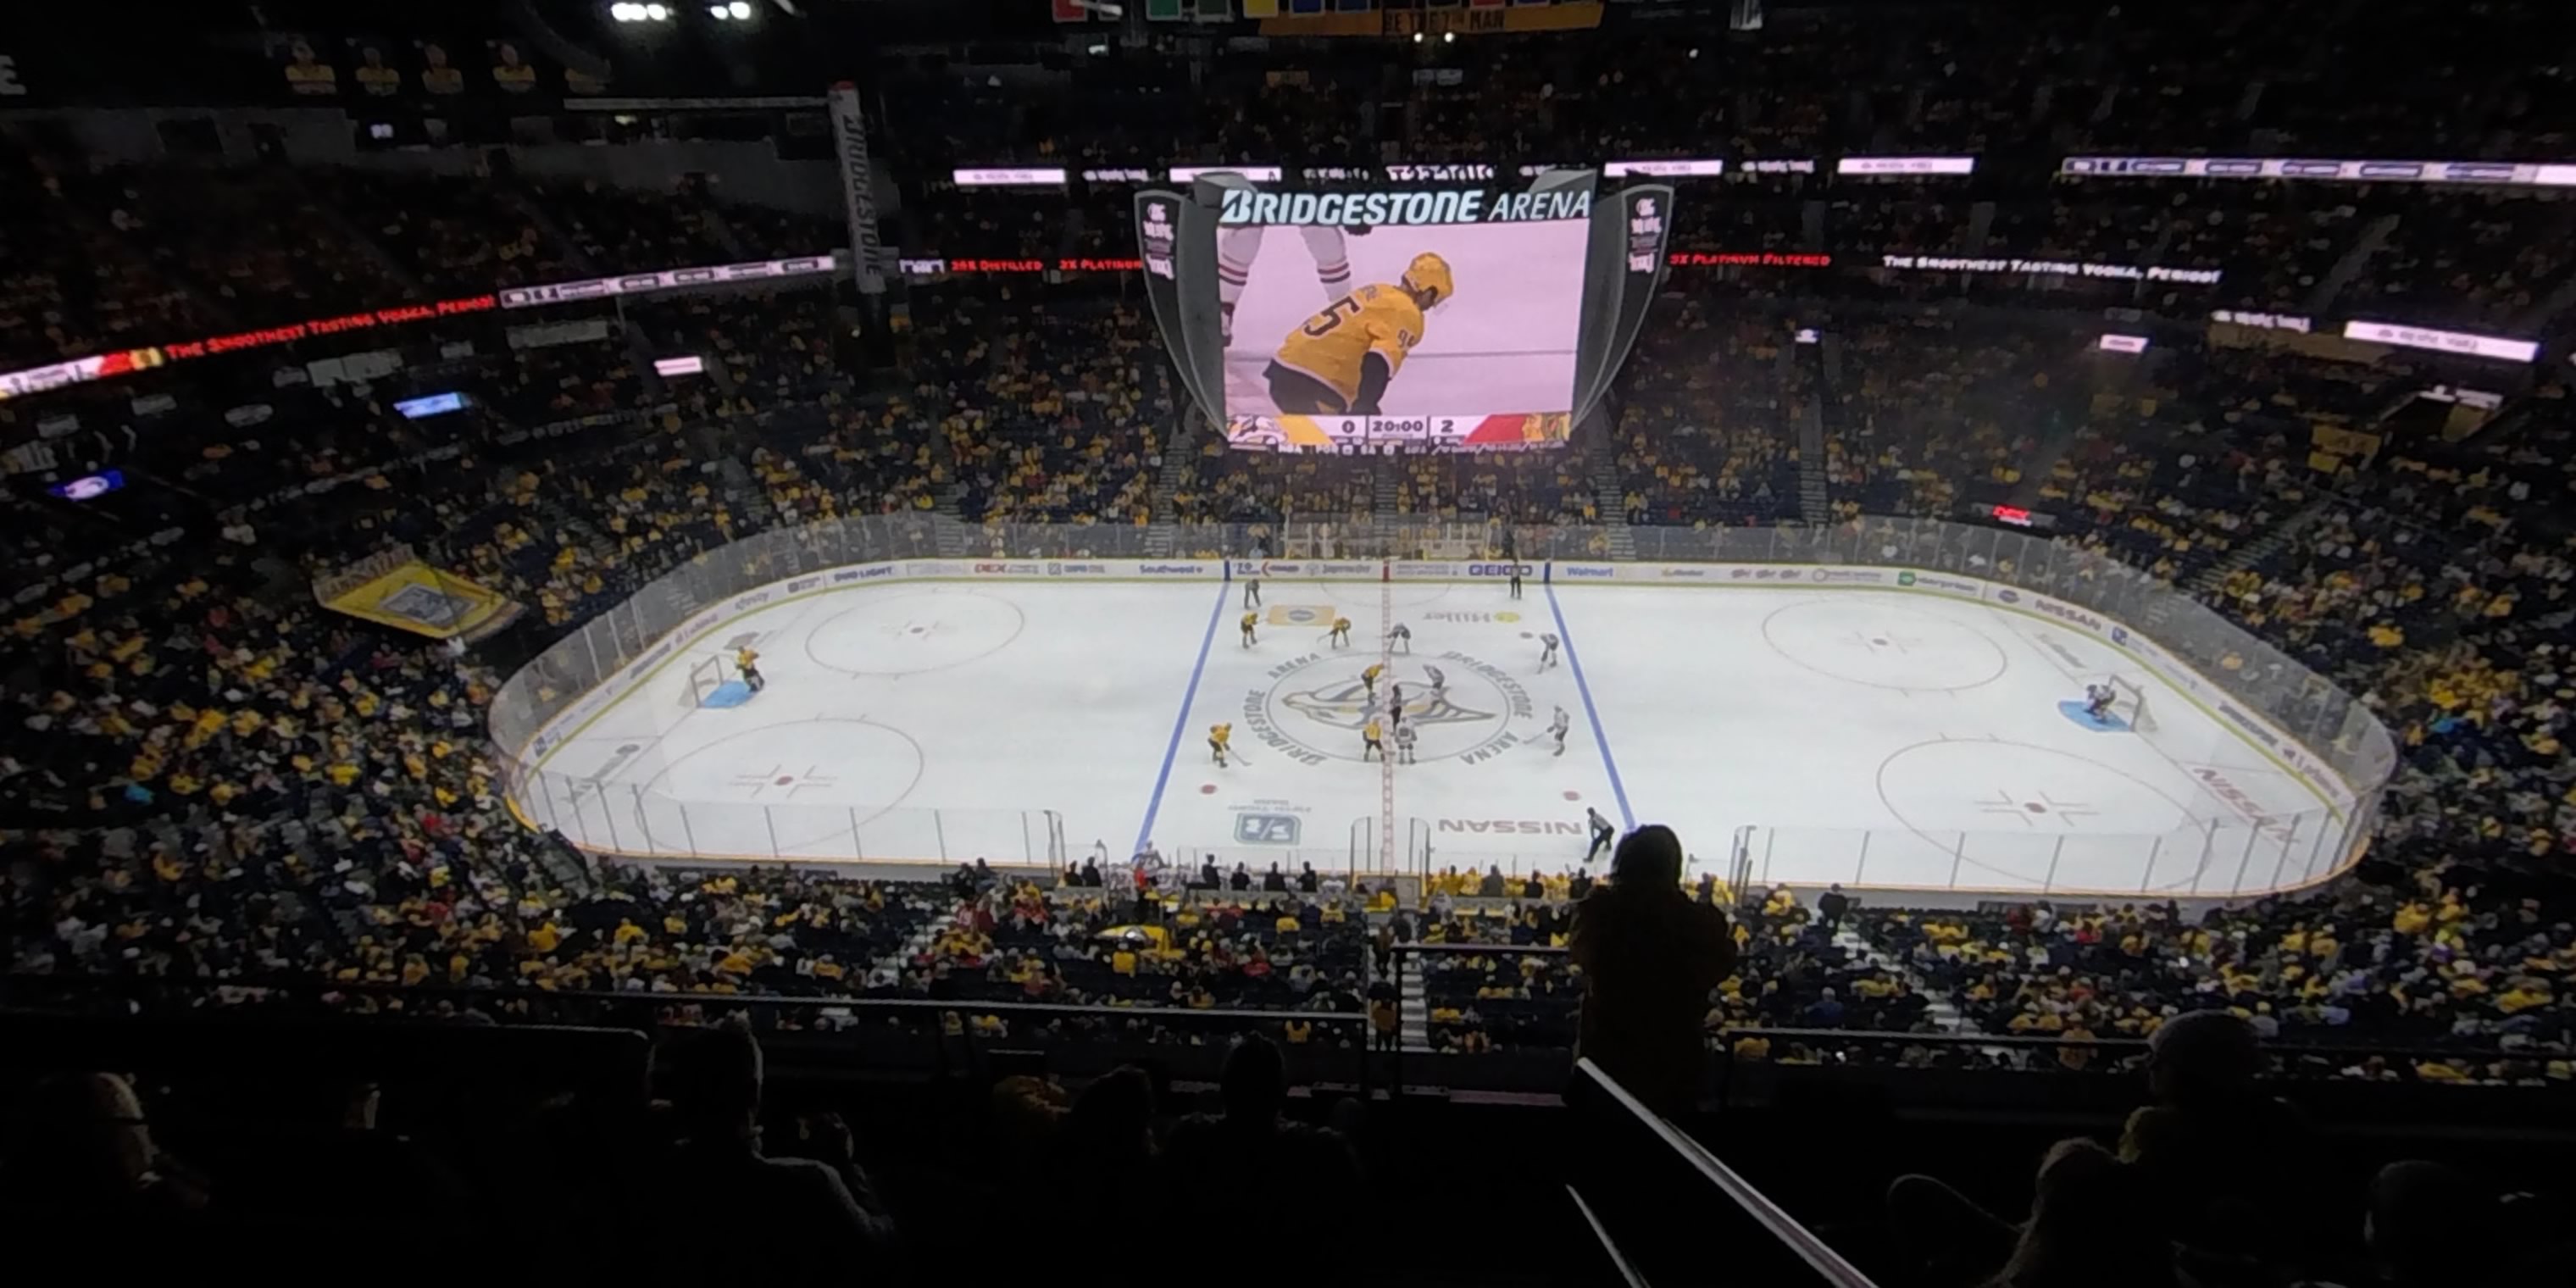 section 325 panoramic seat view  for hockey - bridgestone arena